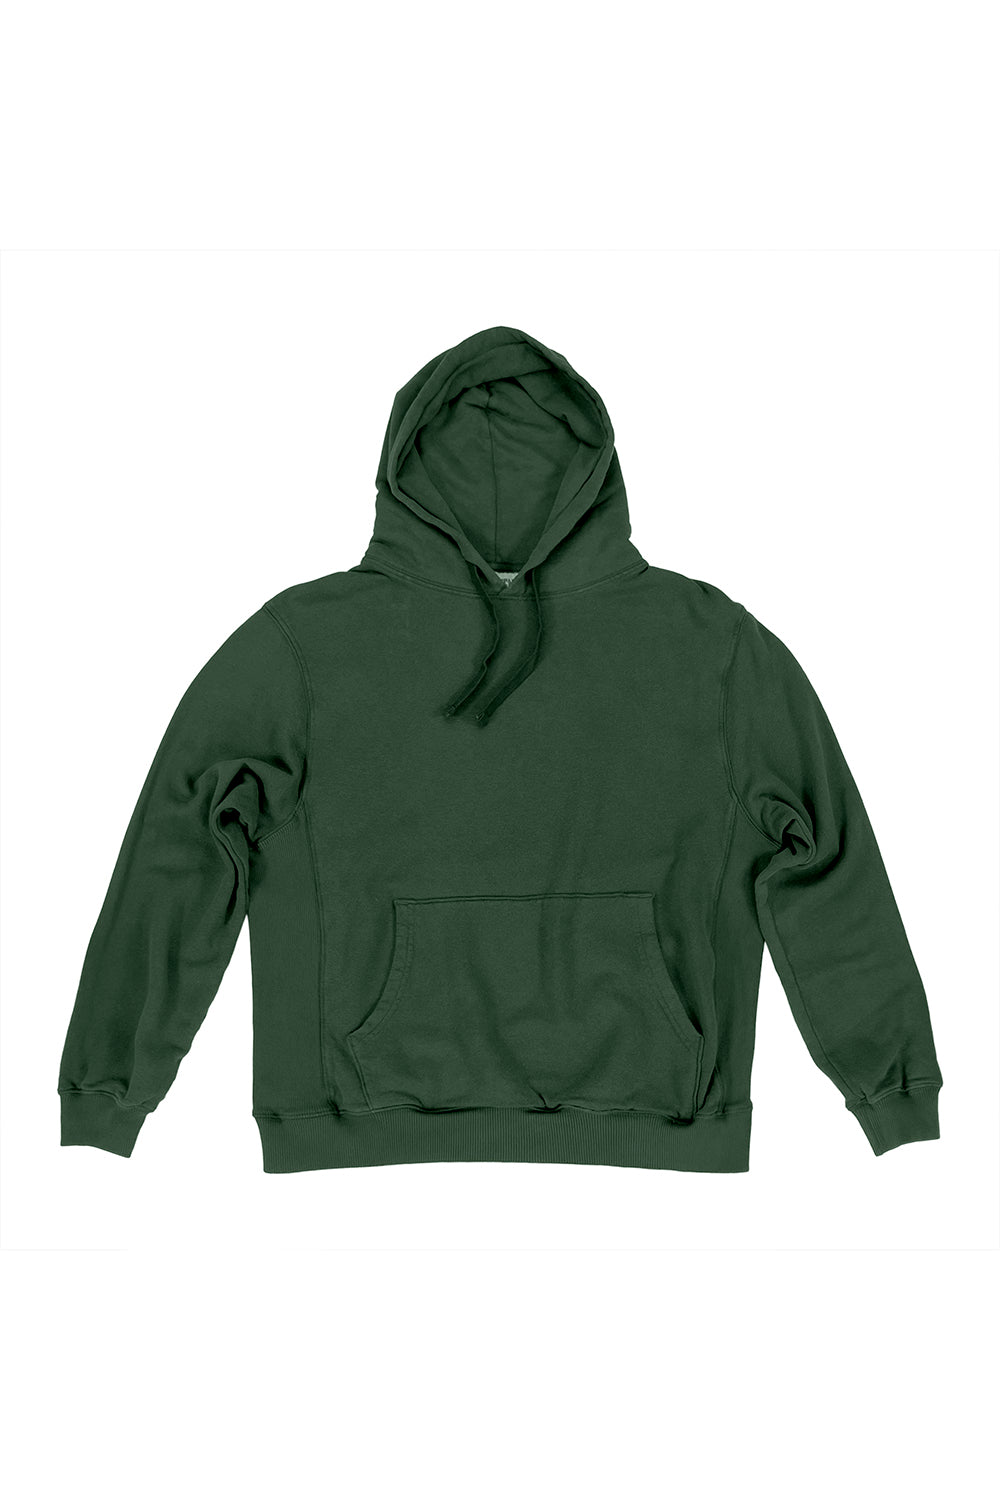 Montauk Hooded Sweatshirt | Jungmaven Hemp Clothing & Accessories / Color: Hunter Green